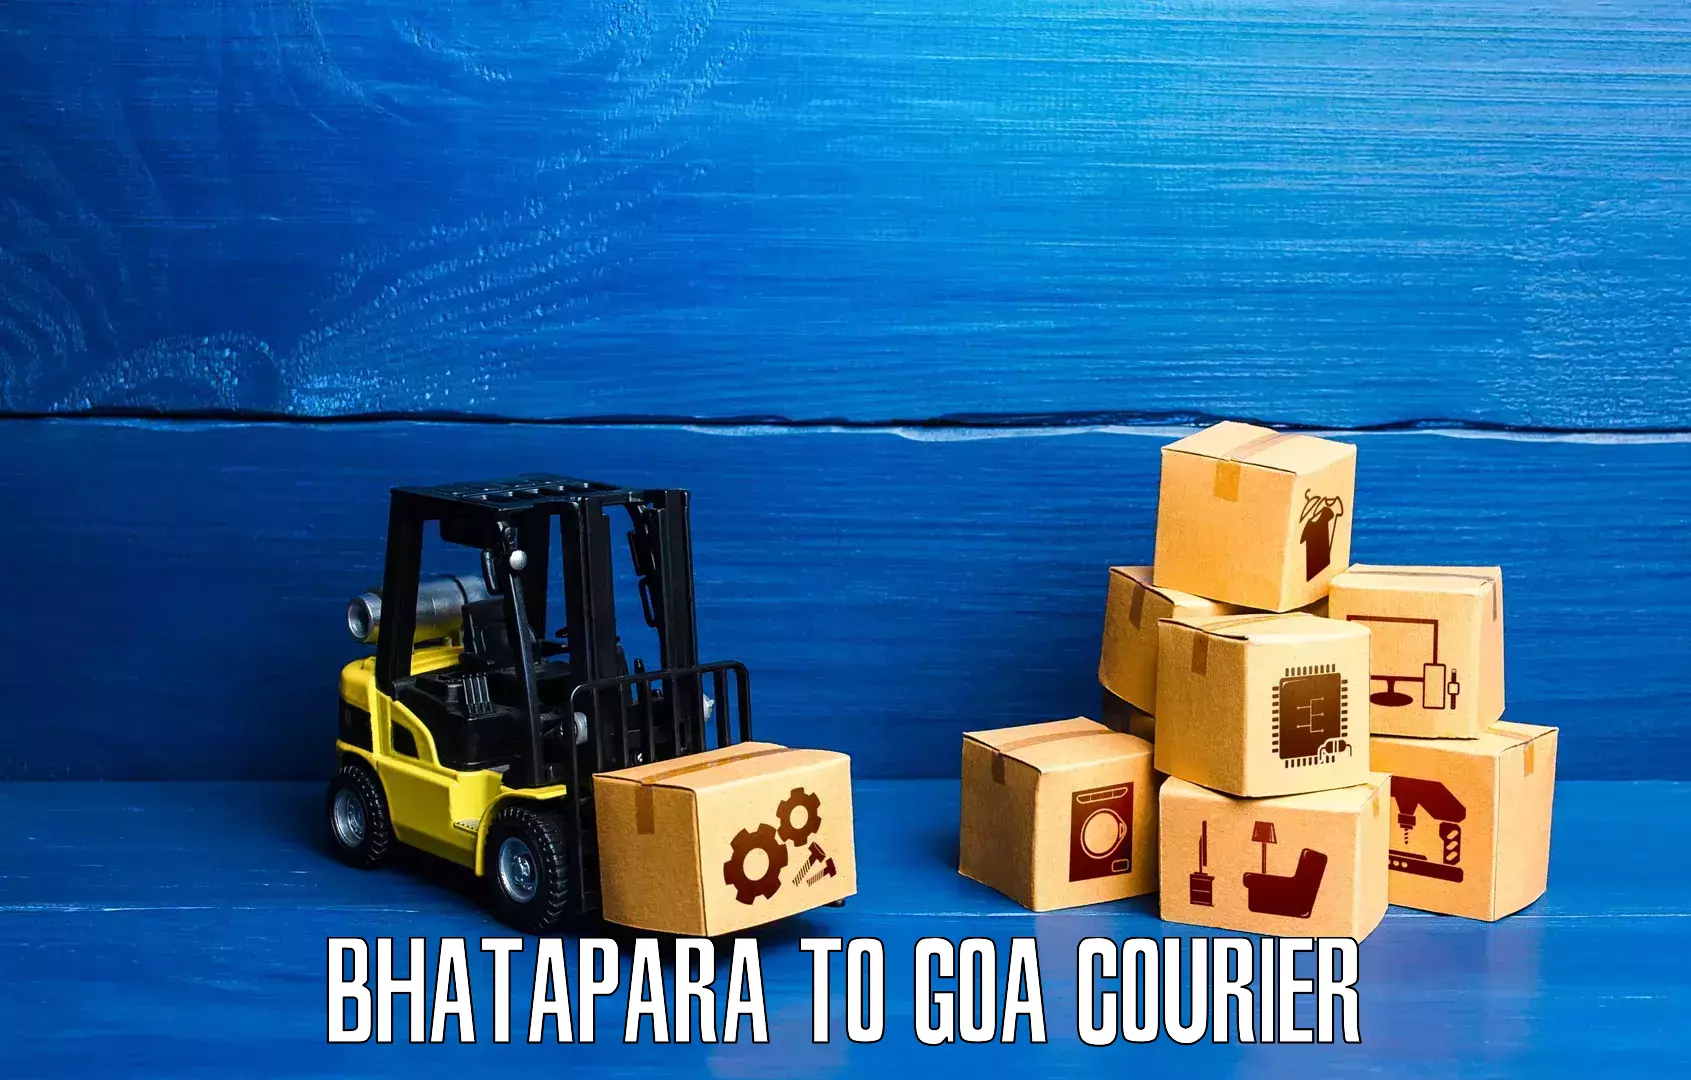 Courier service partnerships Bhatapara to Panaji